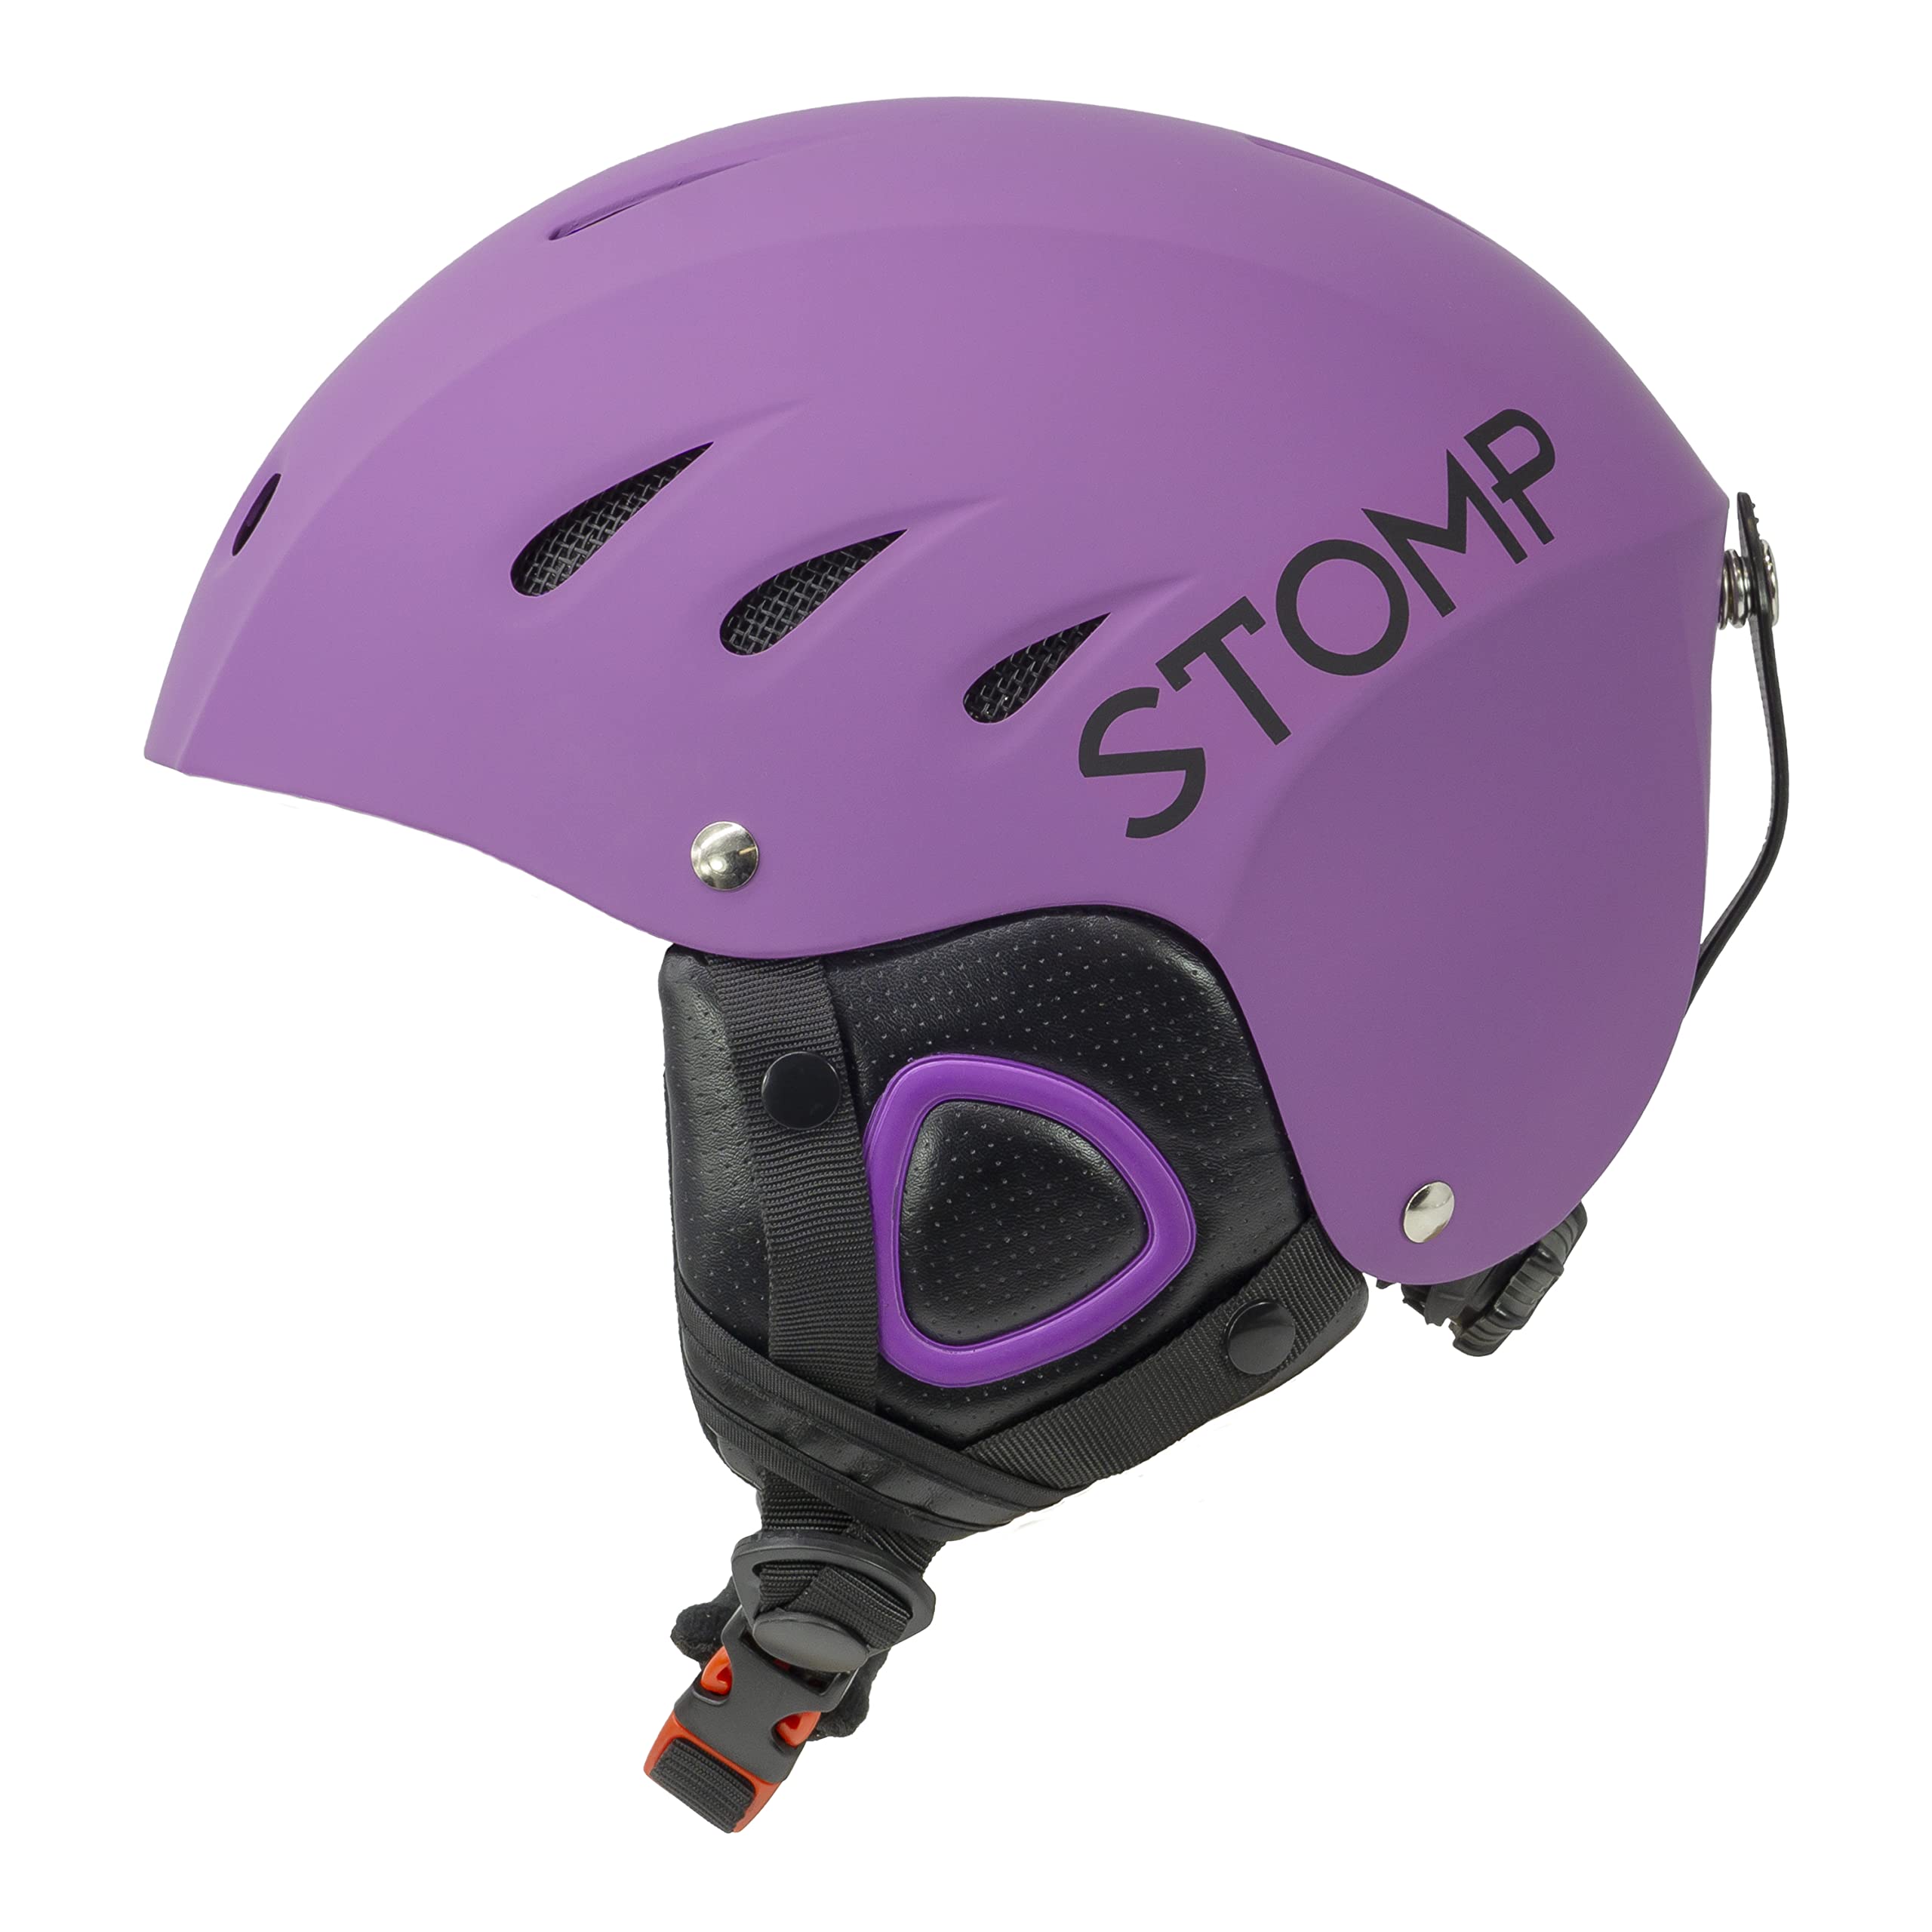 Stomp Ski Snowboarding Snow Sports Helmet With Build-In Pocket In Ear Pads For Wireless Drop-In Headphone (Matte Purple, Large)